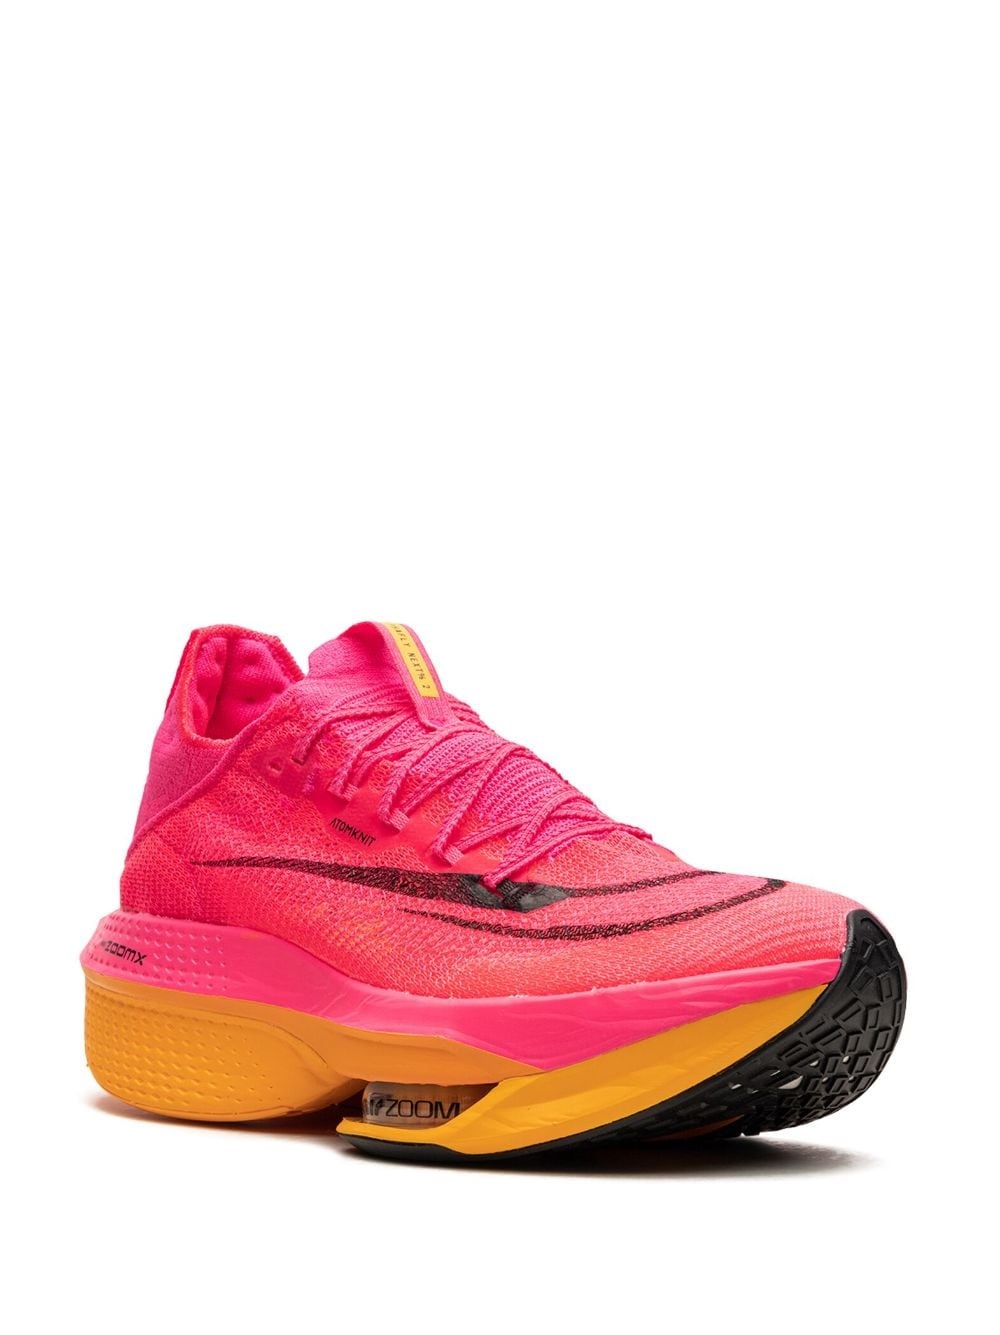 Air Zoom Alphafly Next% 2 "Hyper Pink/Laser Orange" sneakers - 2